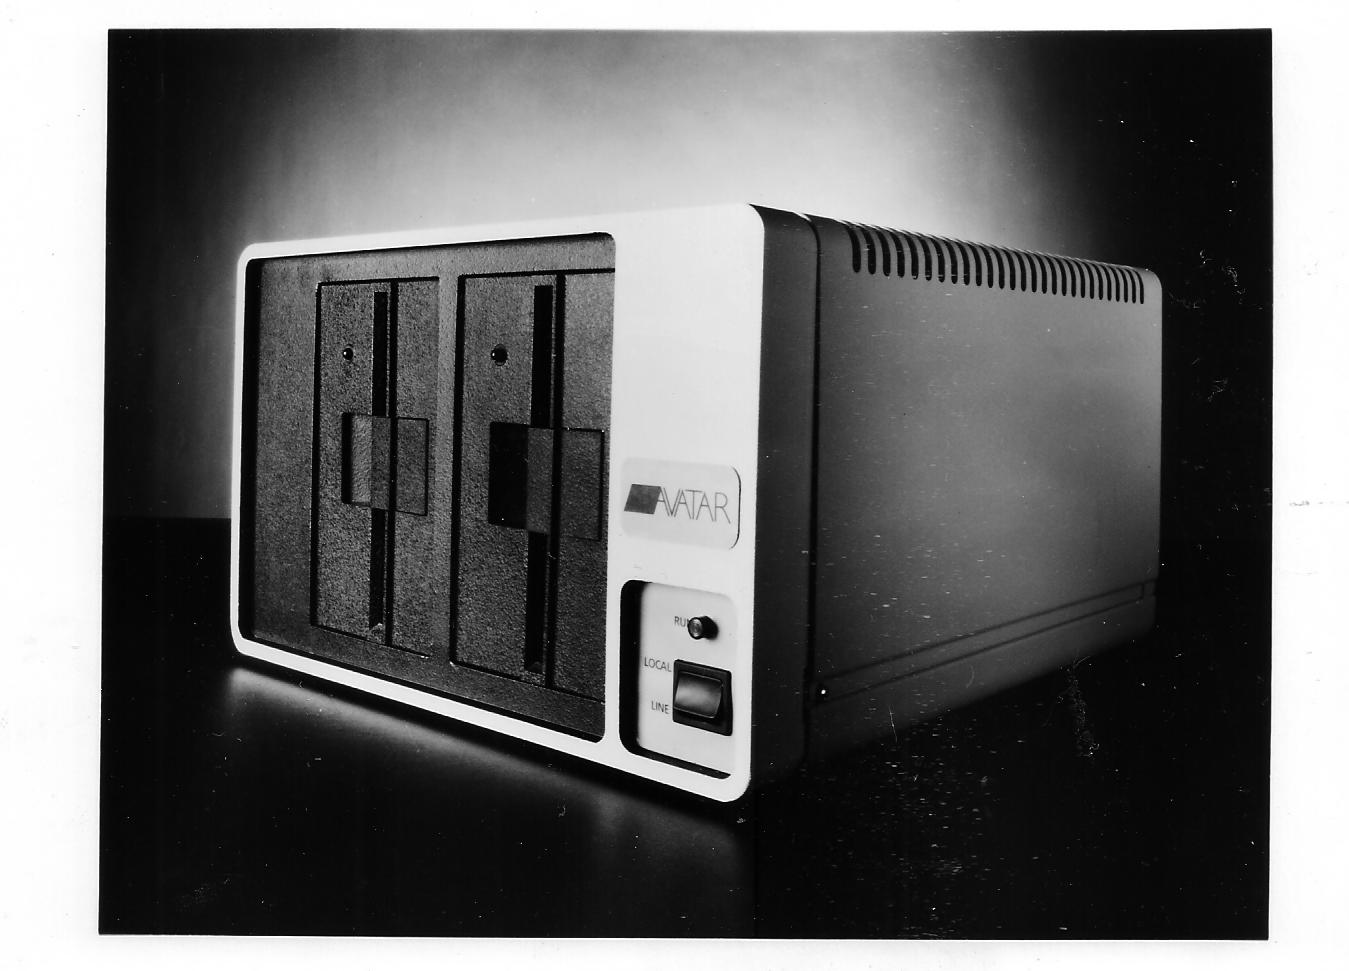 1983-3r-computers-avatar-tci-terminal-converter-photo.jpg